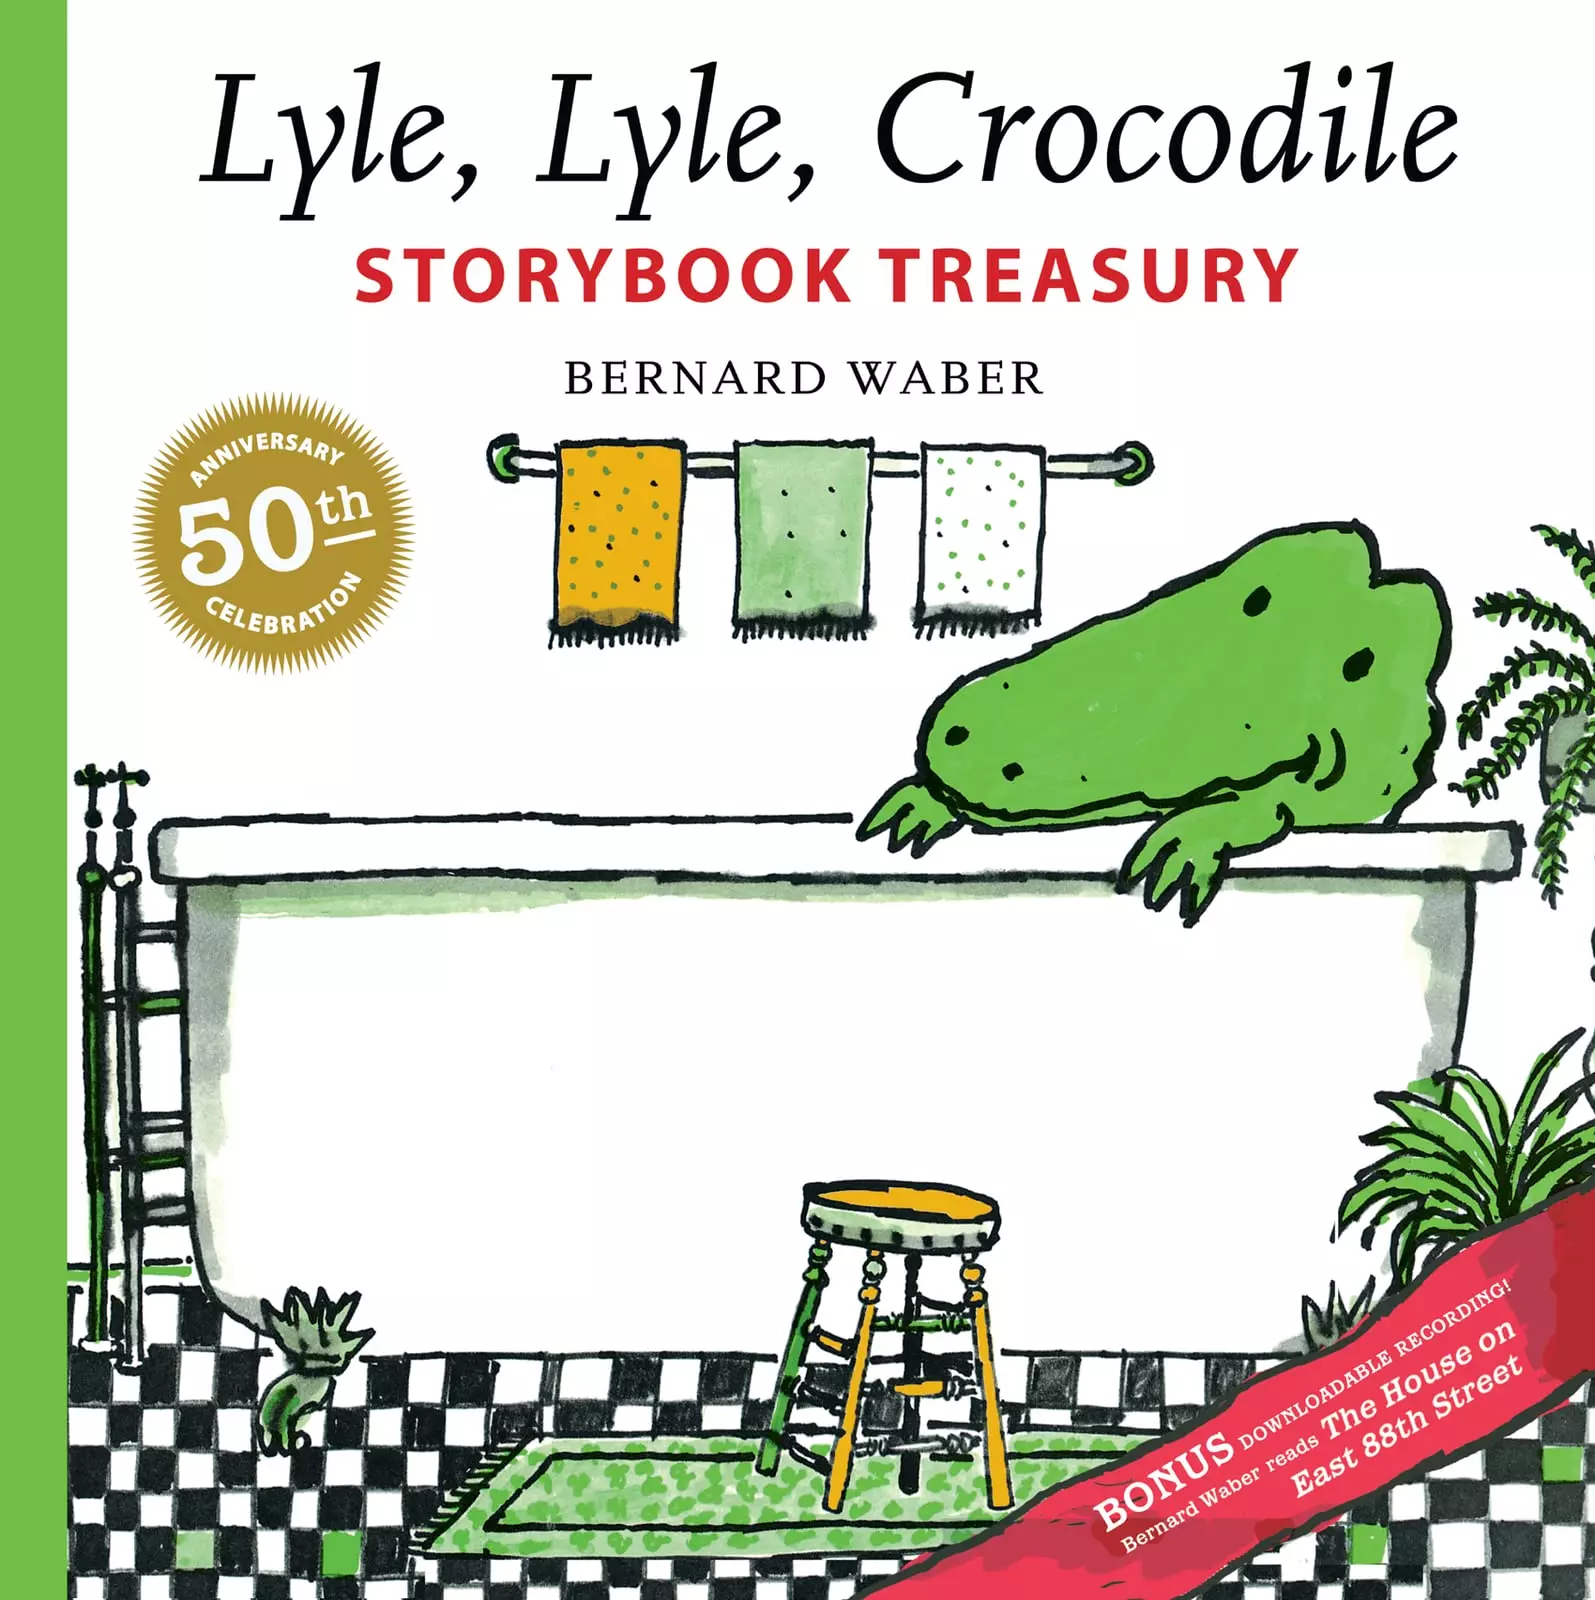 Lyle, Lyle, Crocodile Book by Bernard Waber